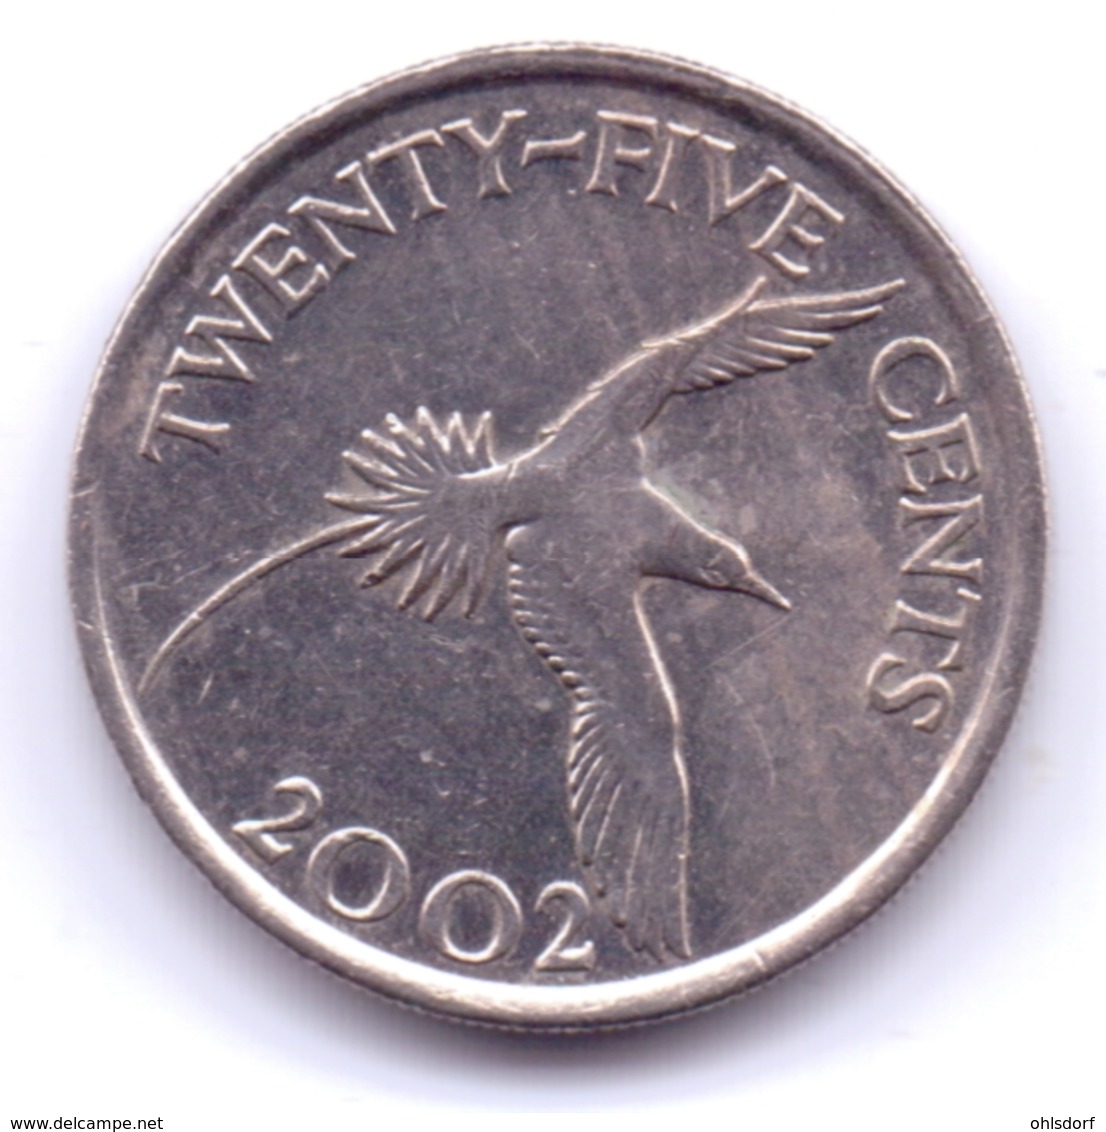 BERMUDA 2002: 25 Cents, KM 110 - Bermuda